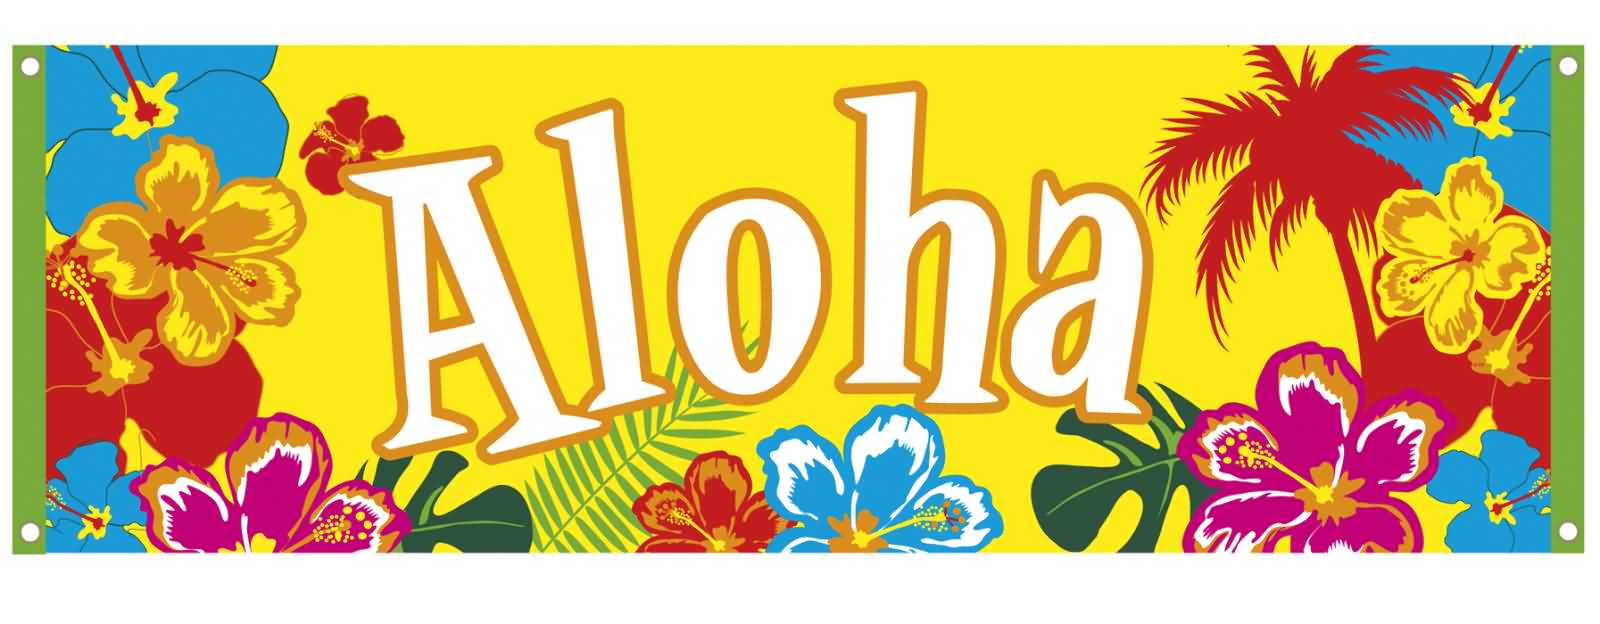 Aloha Colorful Flowers Banner Image